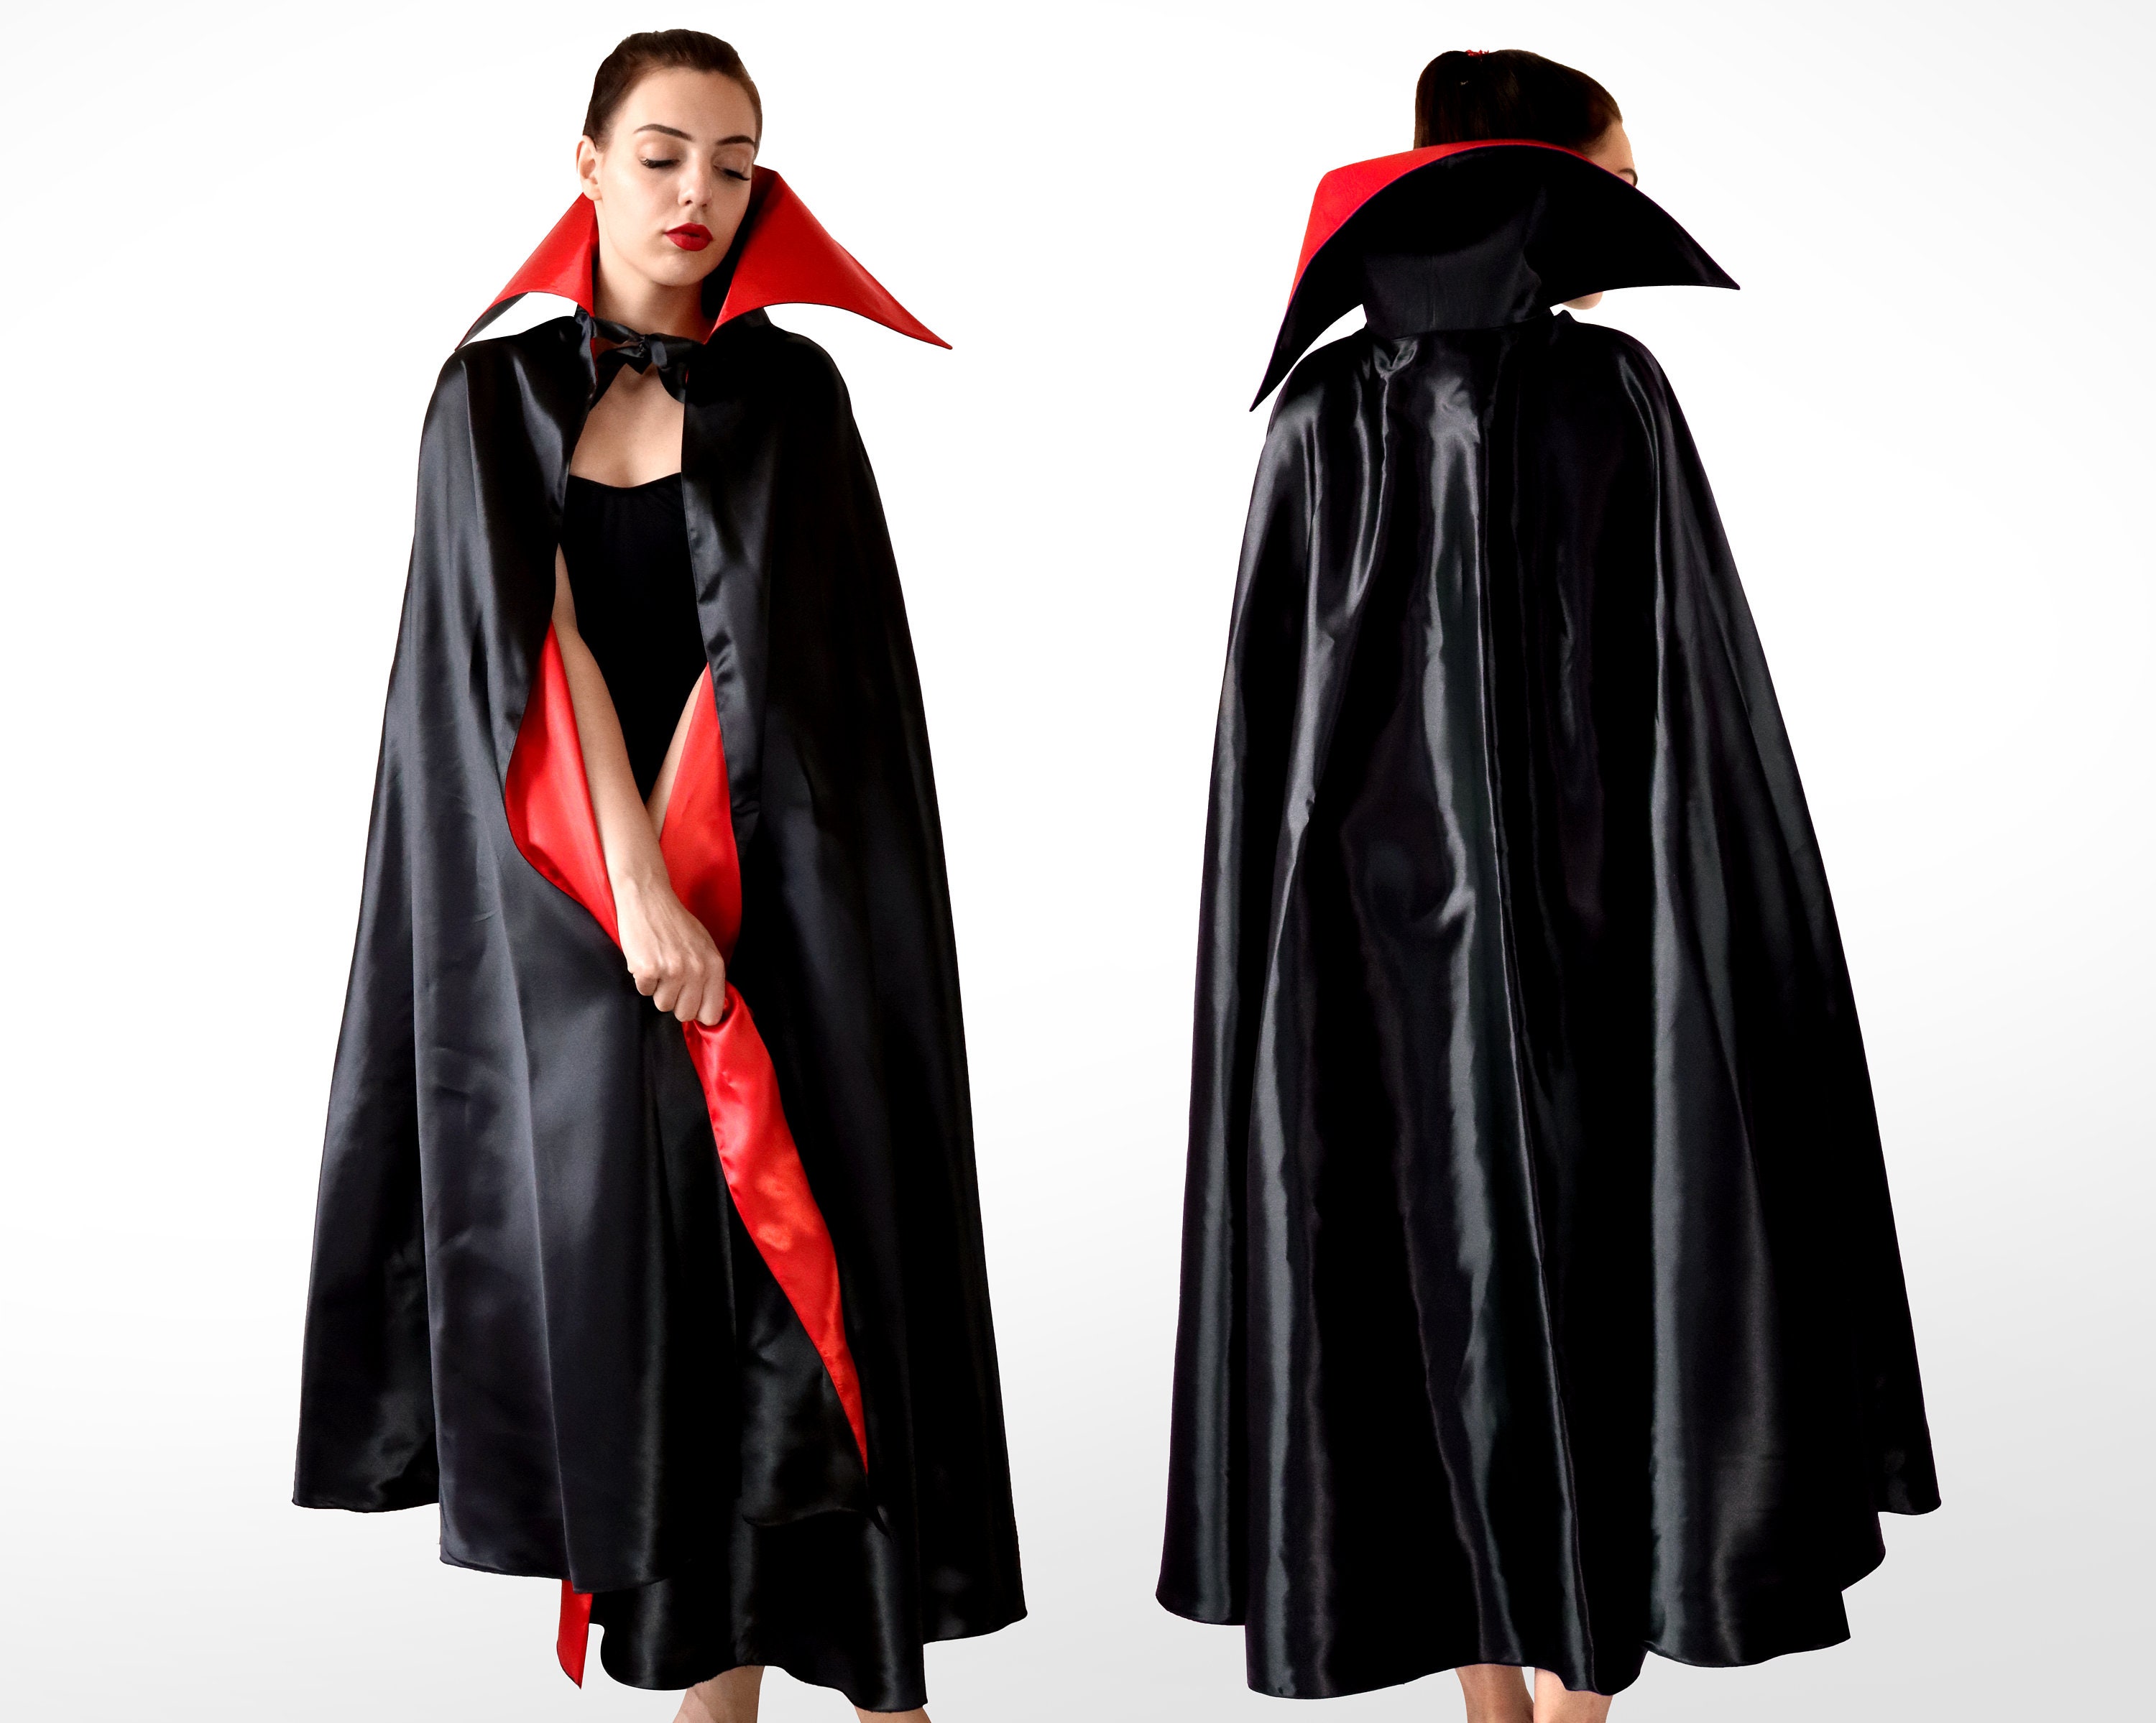 Kids Dracula Costume Purple Vampire Cloak For Halloween Purim Masquerade ▻   ▻ Free Shipping ▻ Up to 70% OFF